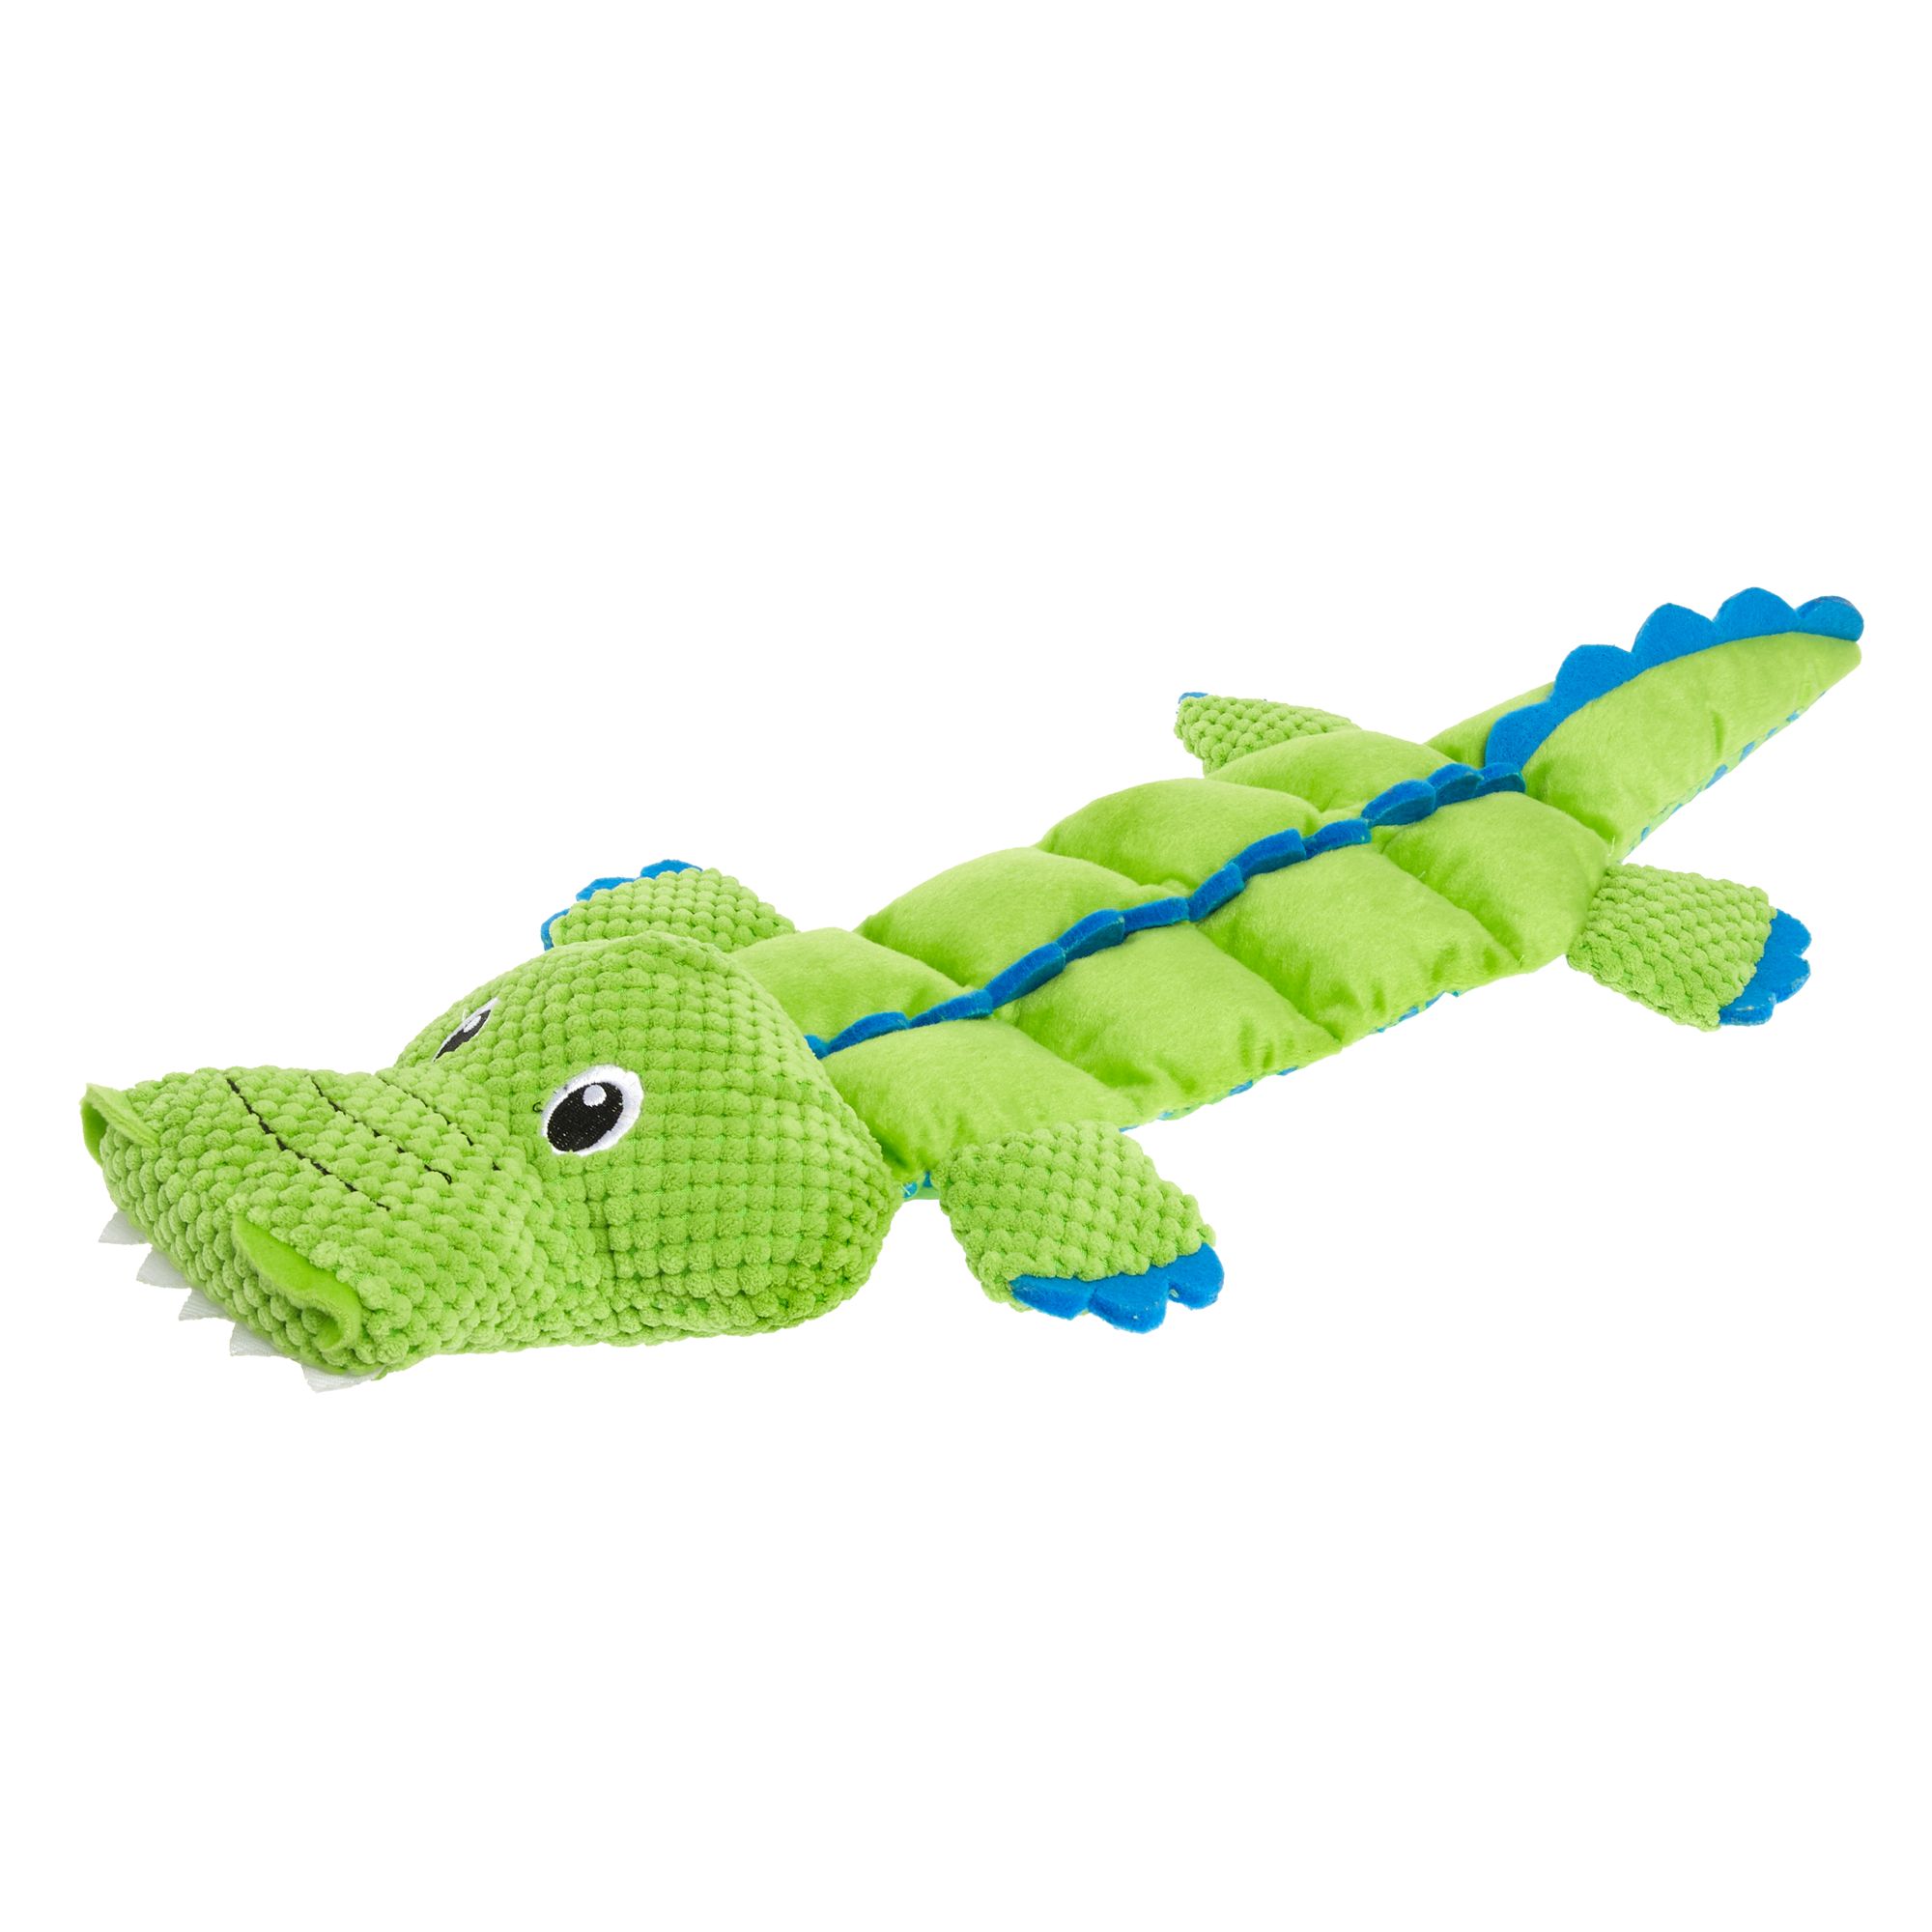 stuffed alligator dog toy